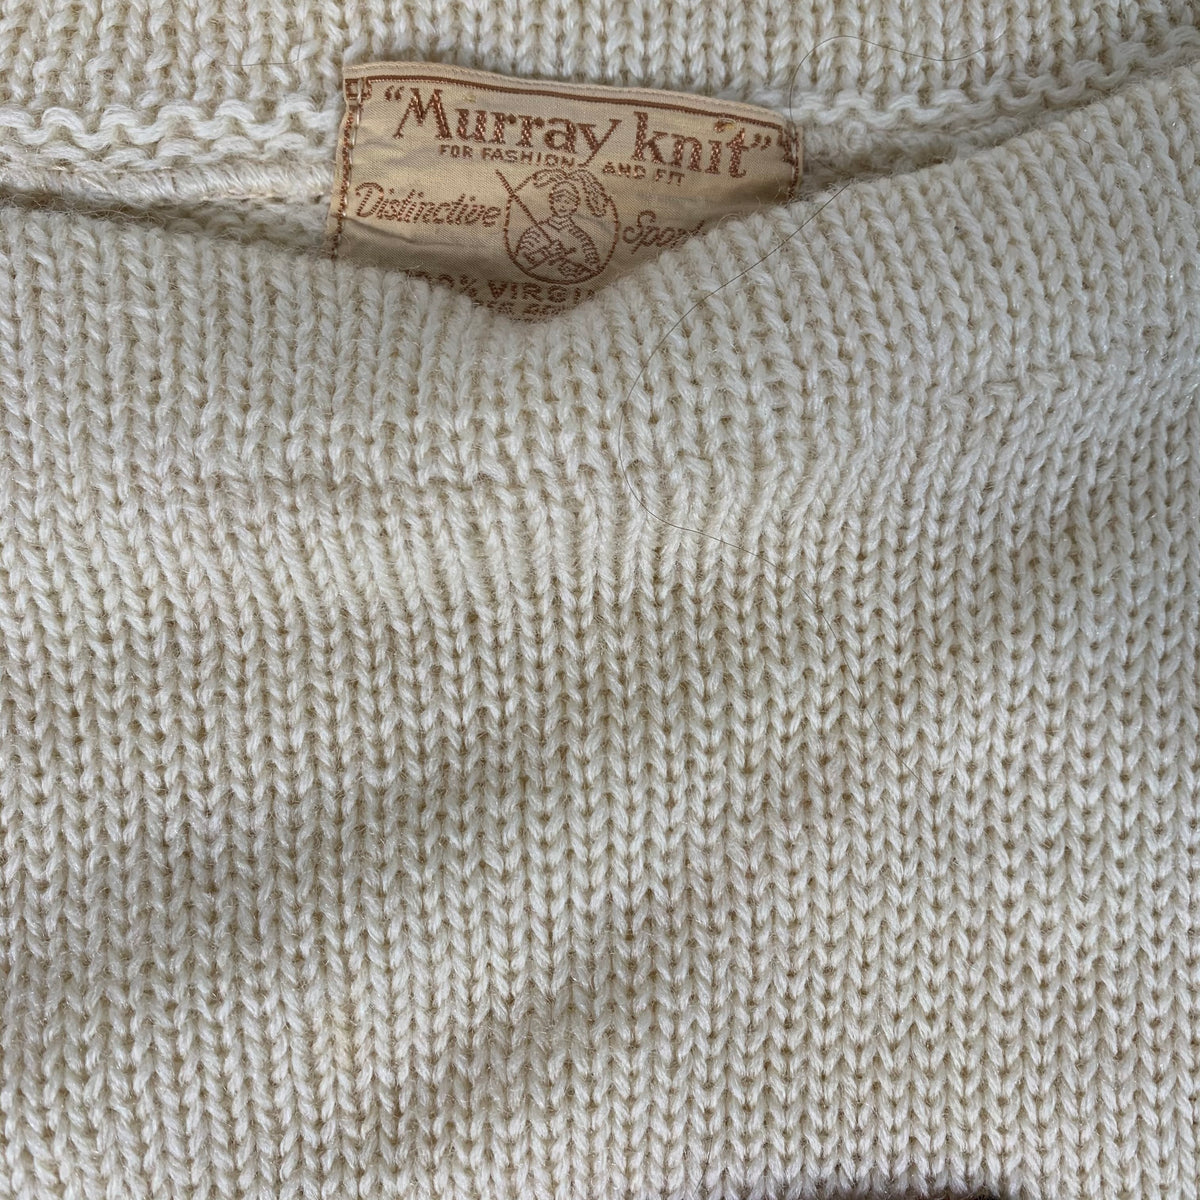 Vintage Boston University &quot;Murray&quot; Wool Knit